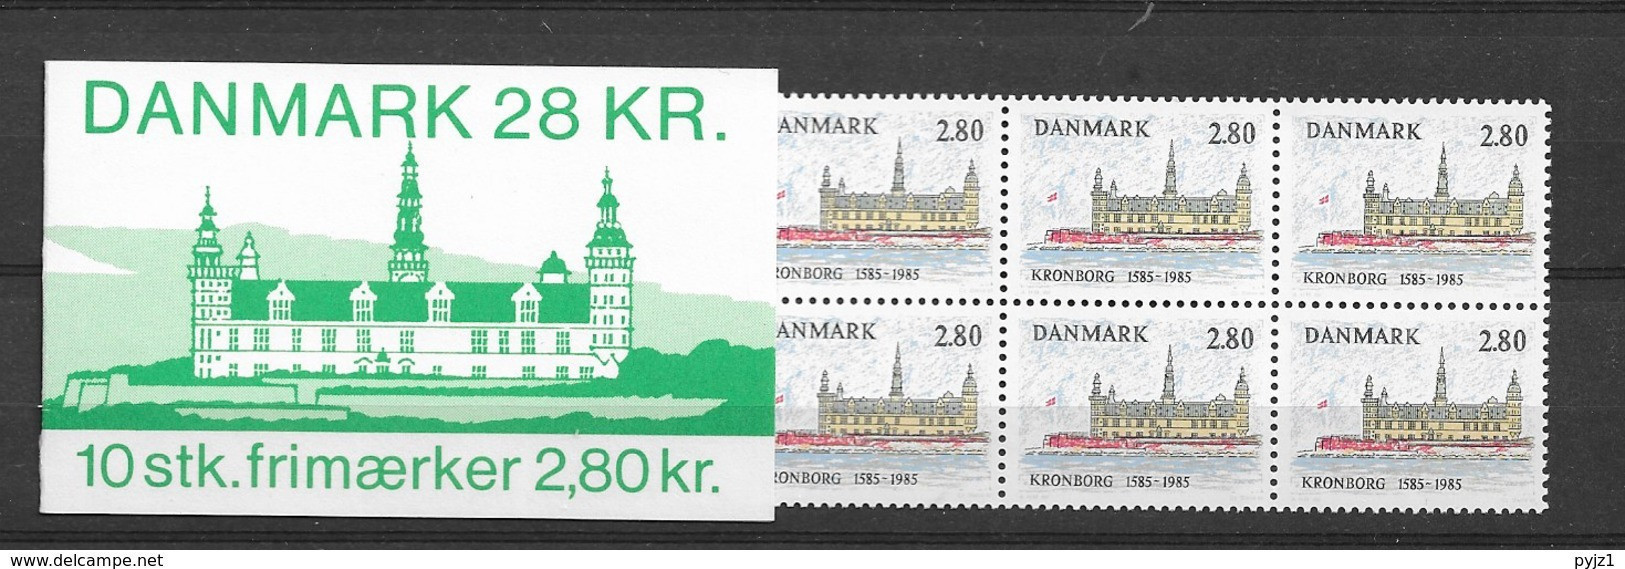 1985 MNH Denmark S39 - Booklets